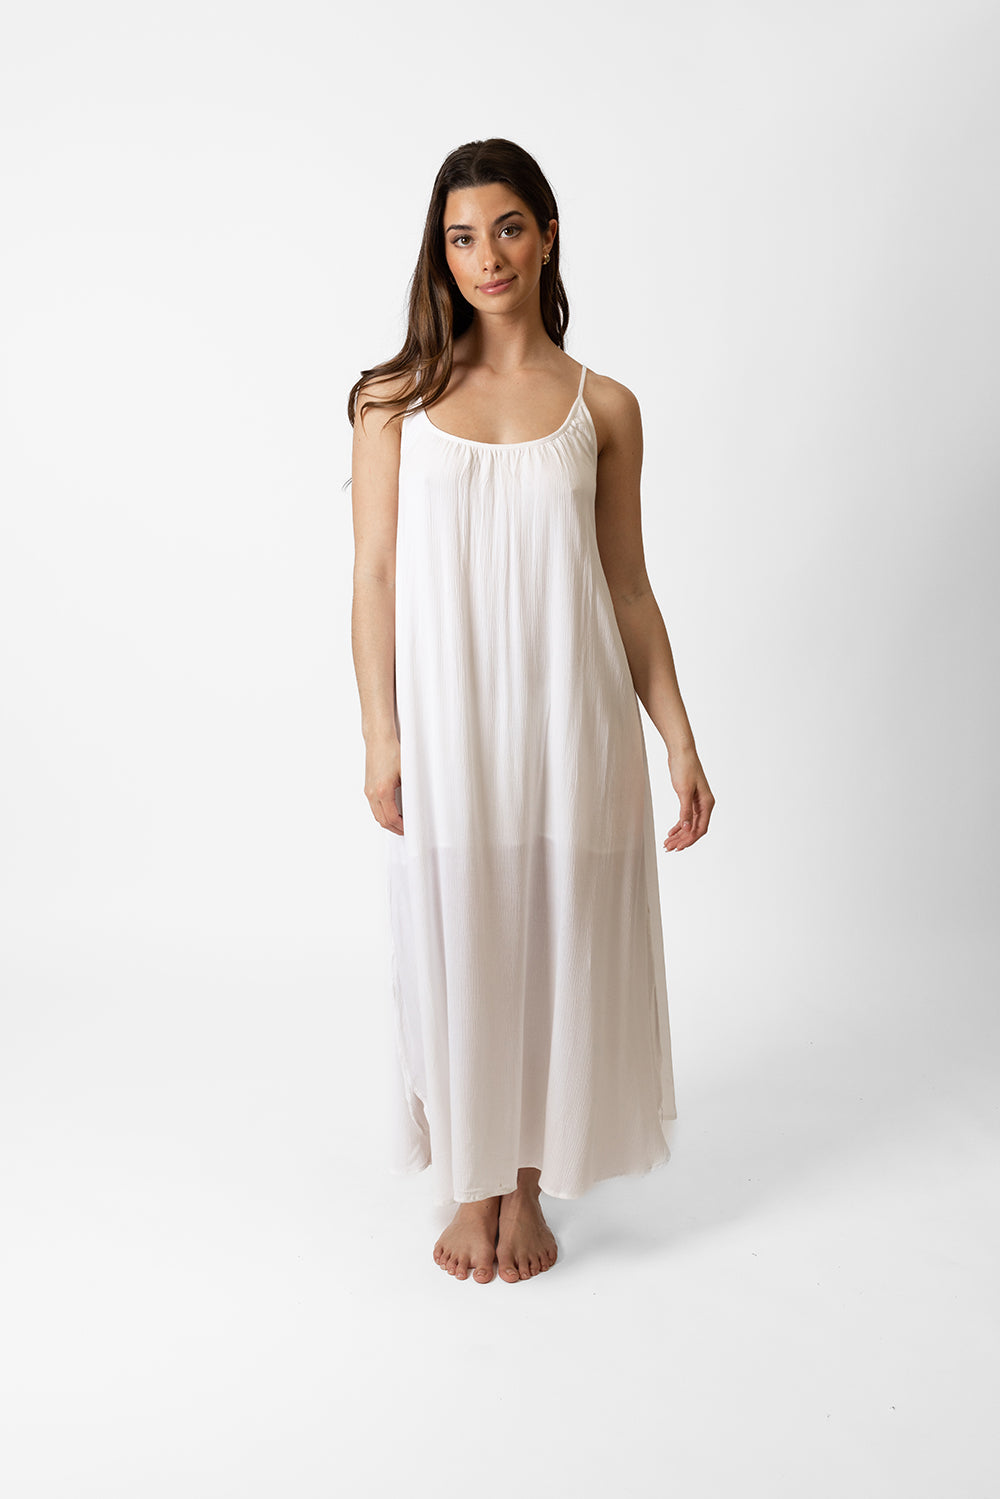 brunette hair woman model wearing a white spaghetti strap flowy oversized midi dress